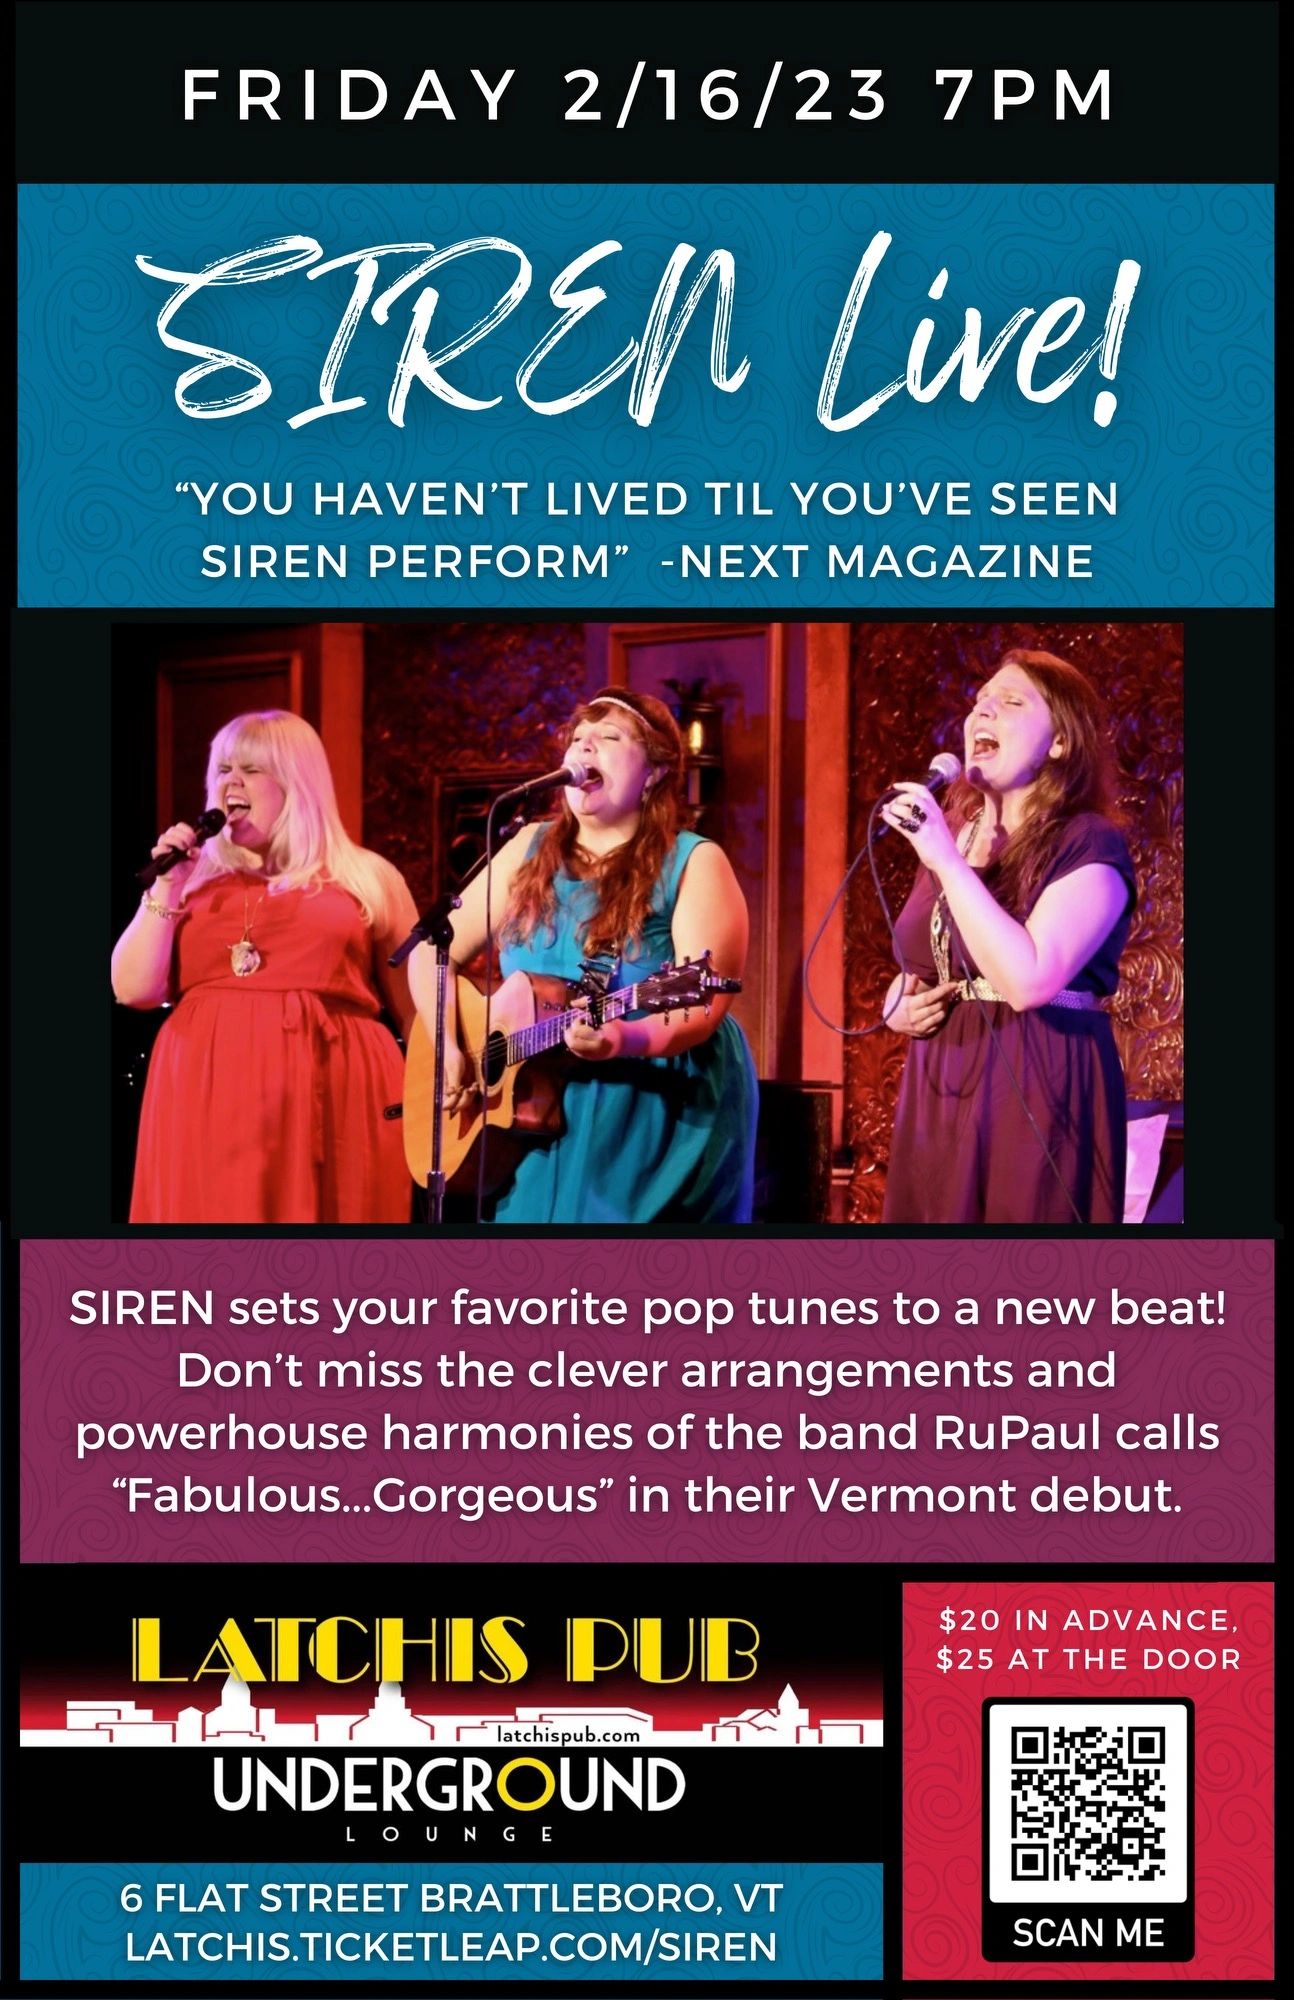 SIREN, a NYC-based trio featuring Shanna Sharp (vocals/guitar), Colleen Harris (vocals/precussion) a